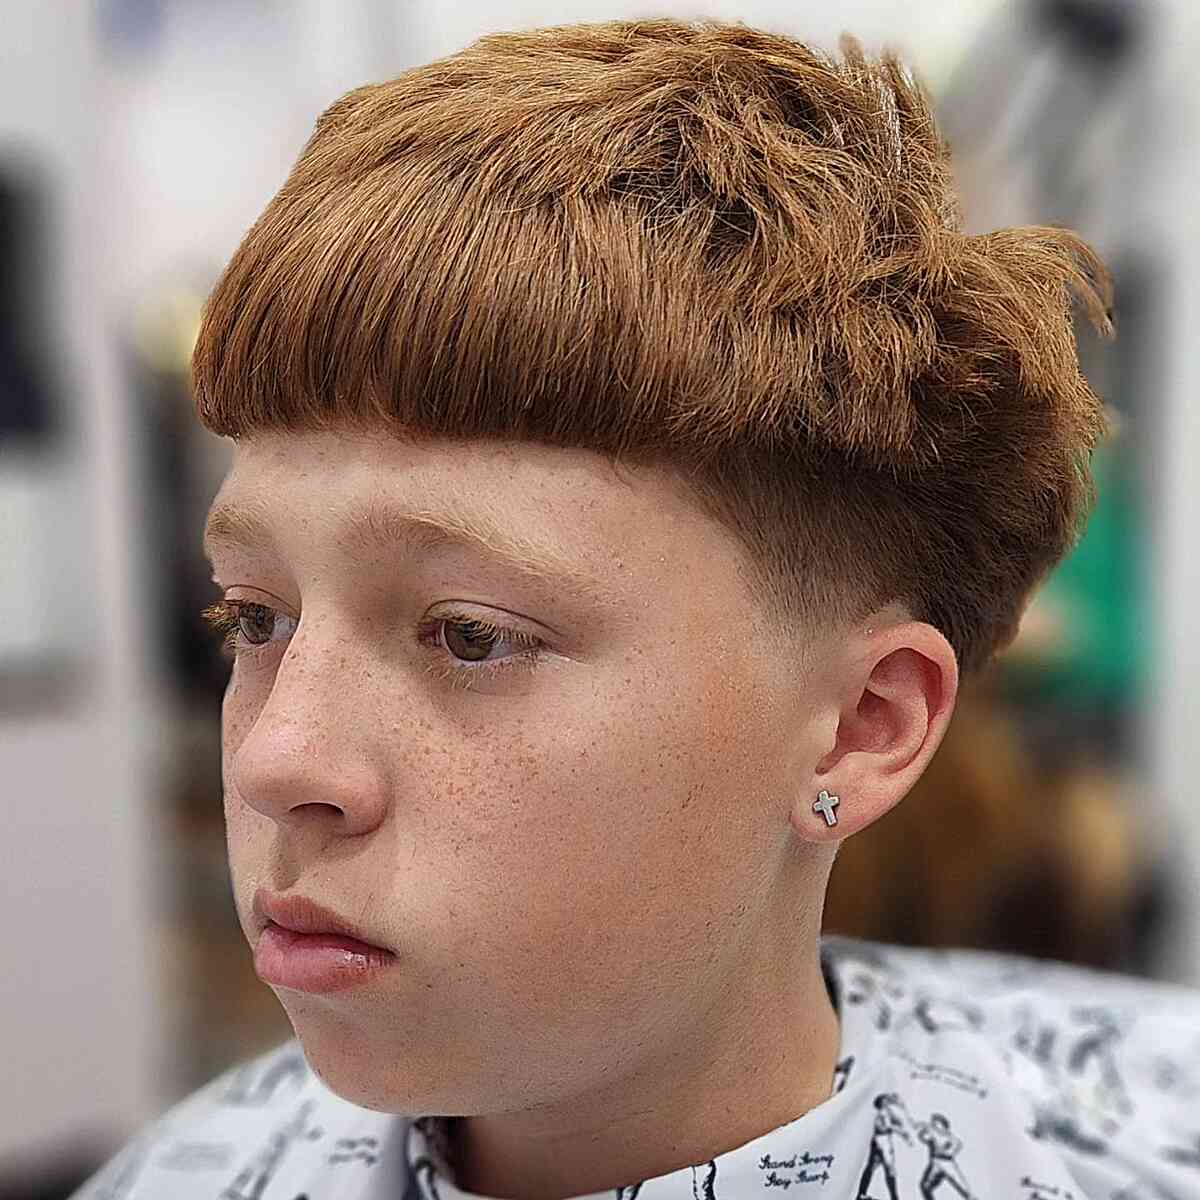 Trendy Edgar Cut for Boys with thick hair